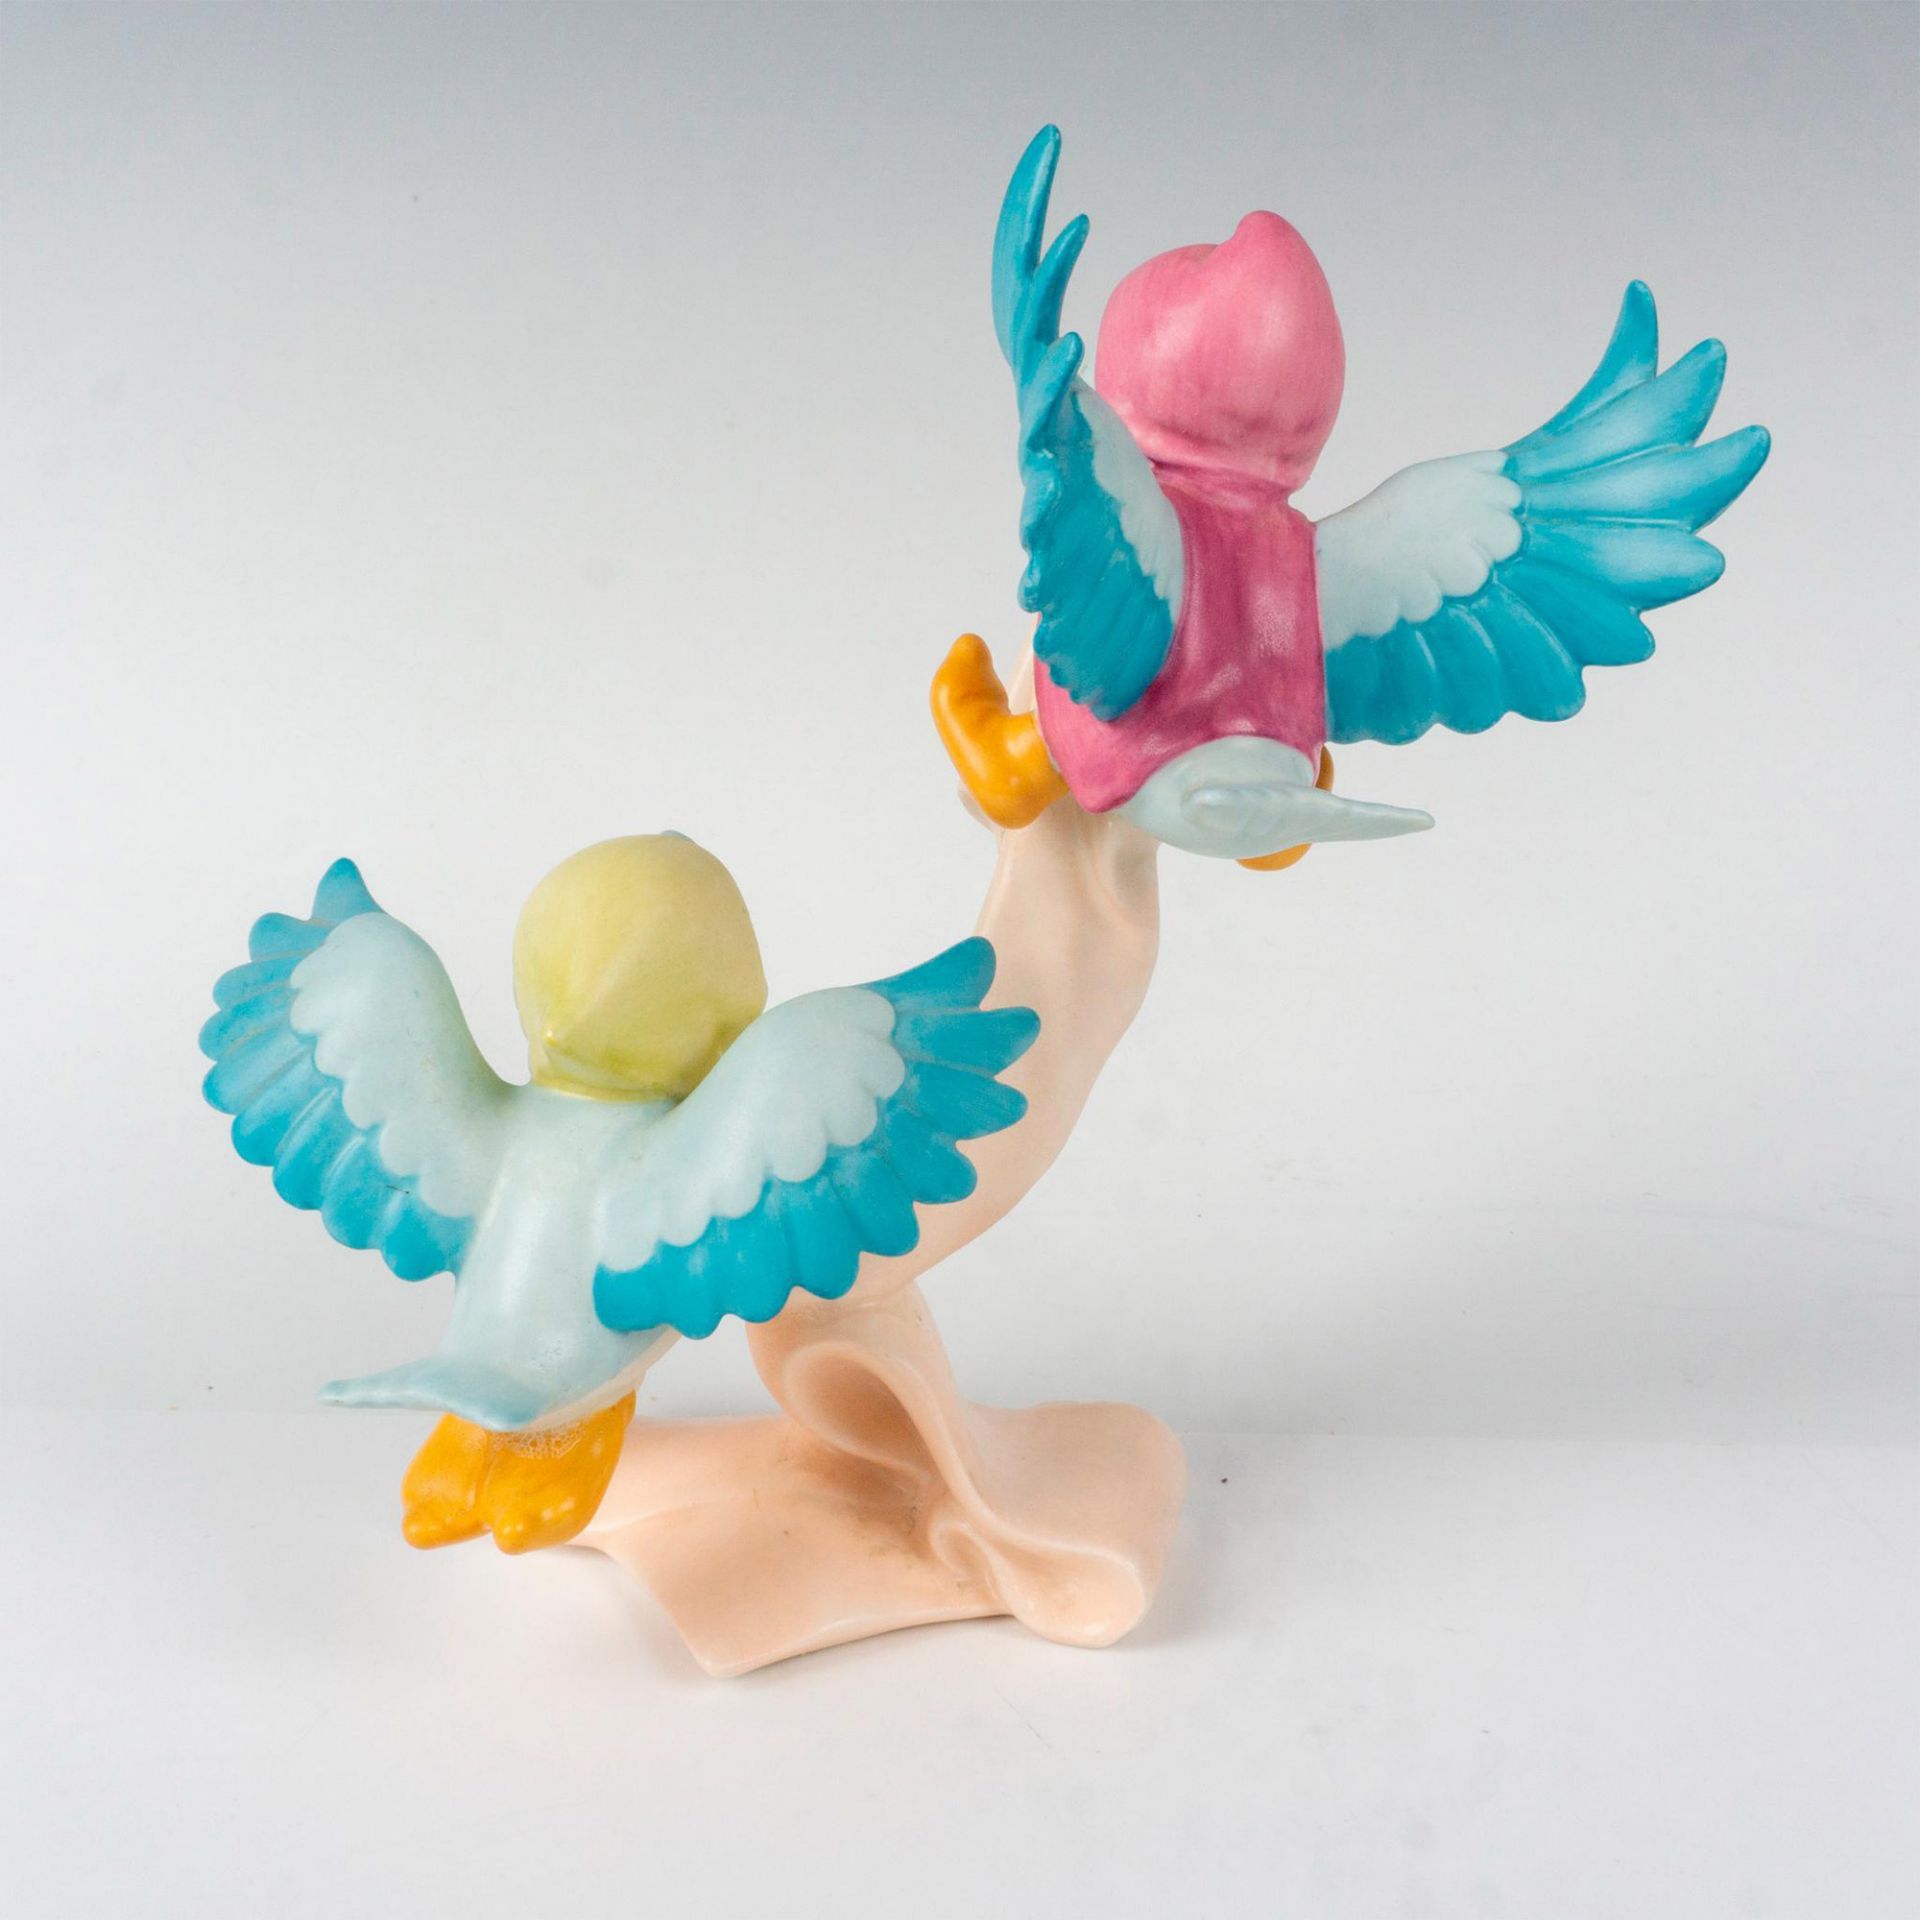 Walt Disney Classics Collection Figurine, Birds with Sash - Image 2 of 4